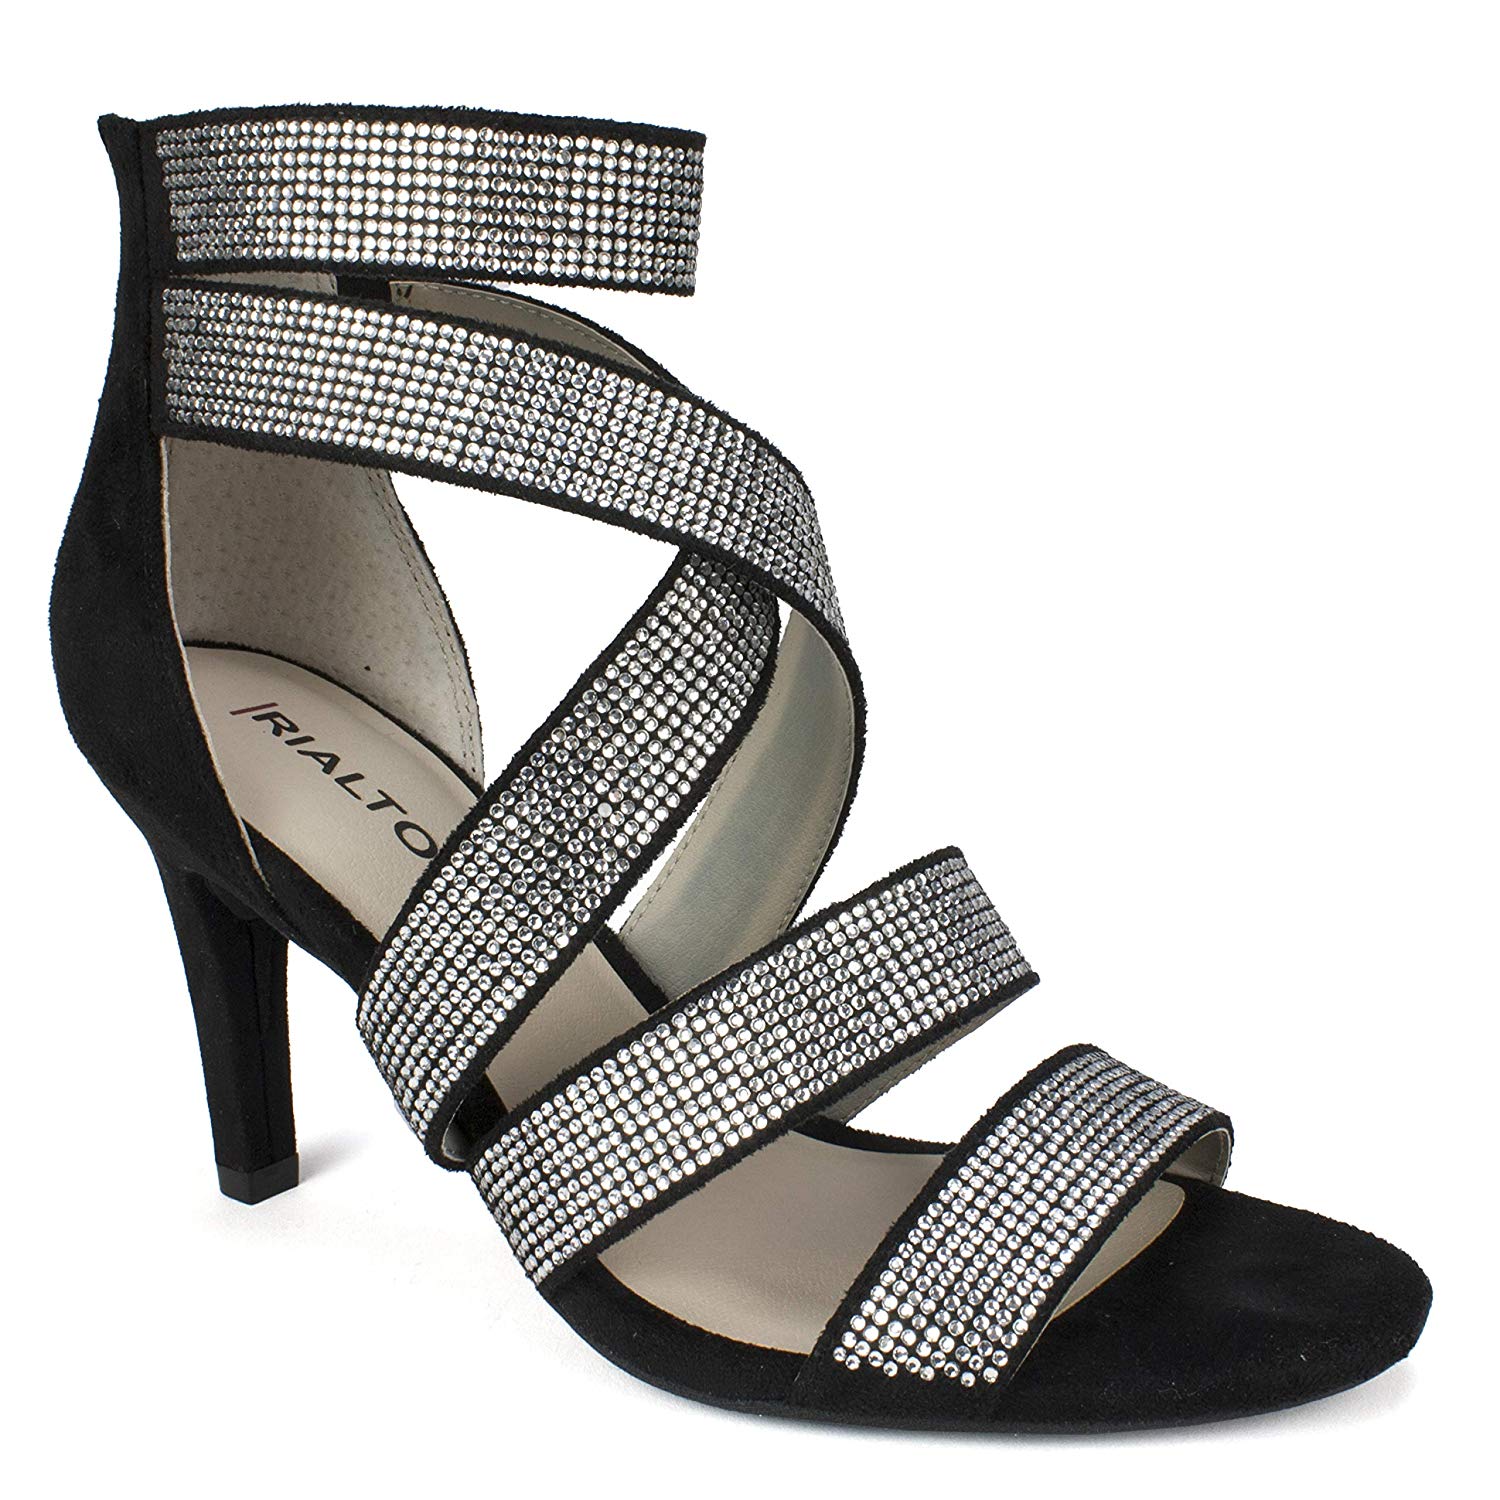 RIALTO Shoes REVO Women's Heel, Black, Size 8.5 | eBay